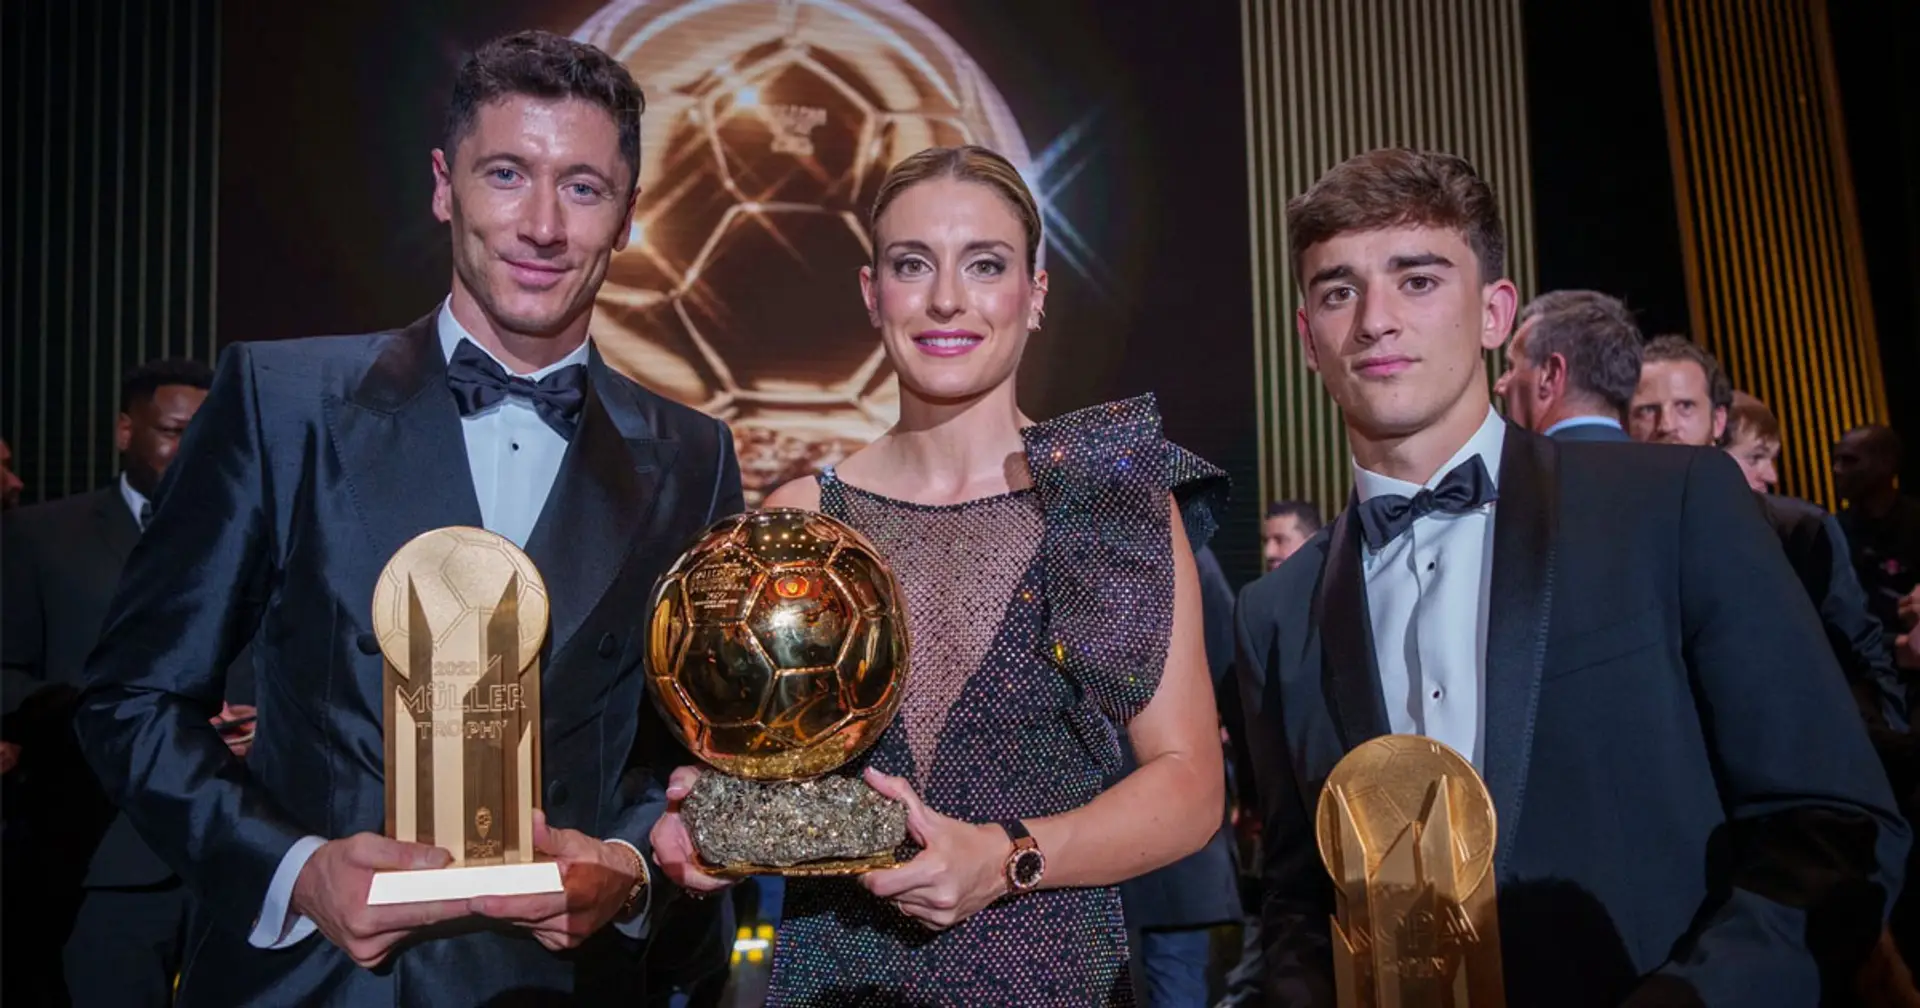 Putellas, Gavi and Lewandowski will showcase Ballon d'Or awards to Barca fans - dates revealed